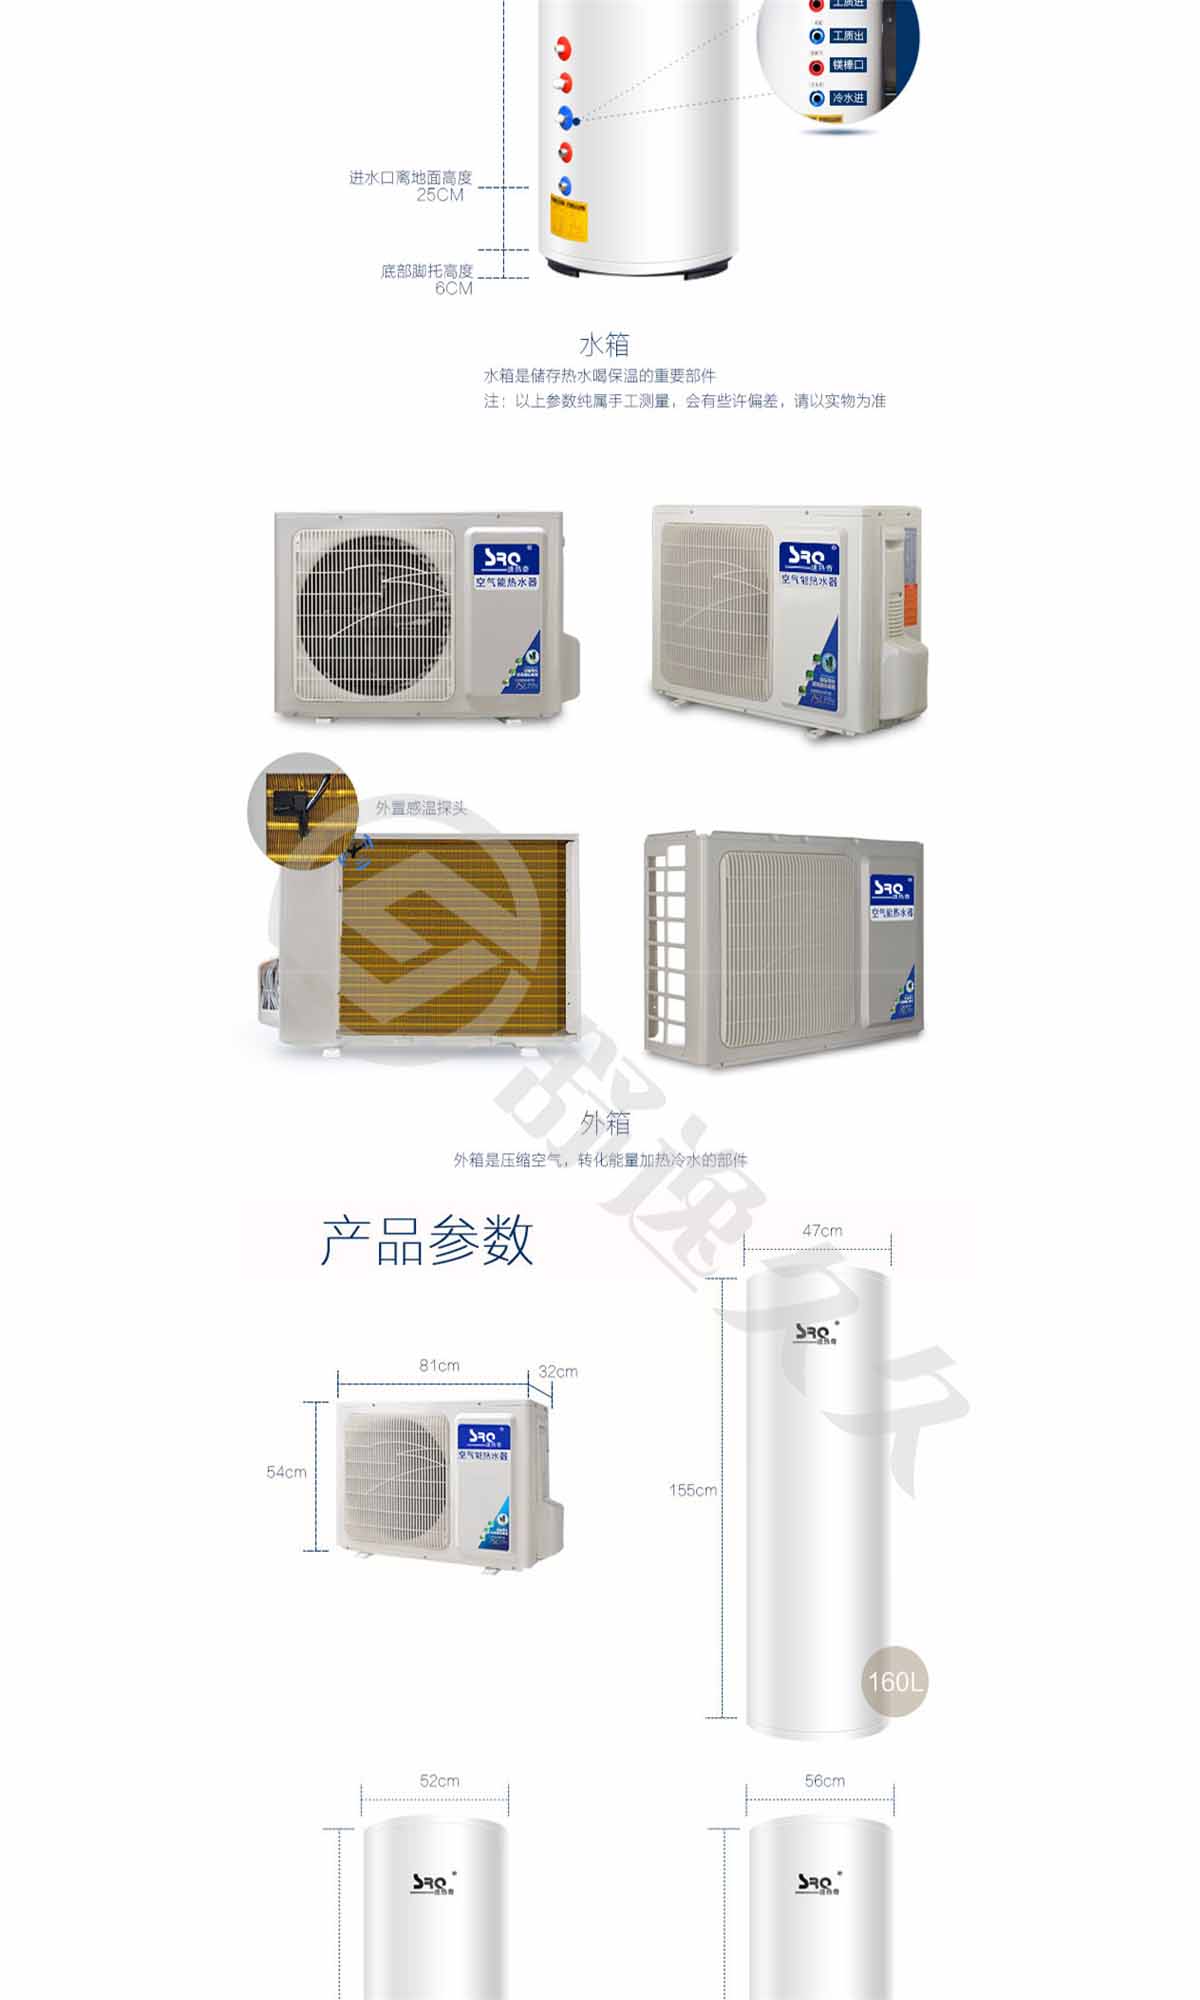 SRQ/速热奇 热水器SRQ-8066 空气能热水器320L WIFI远程操作 节能环保中央供水热泵空气能热水器